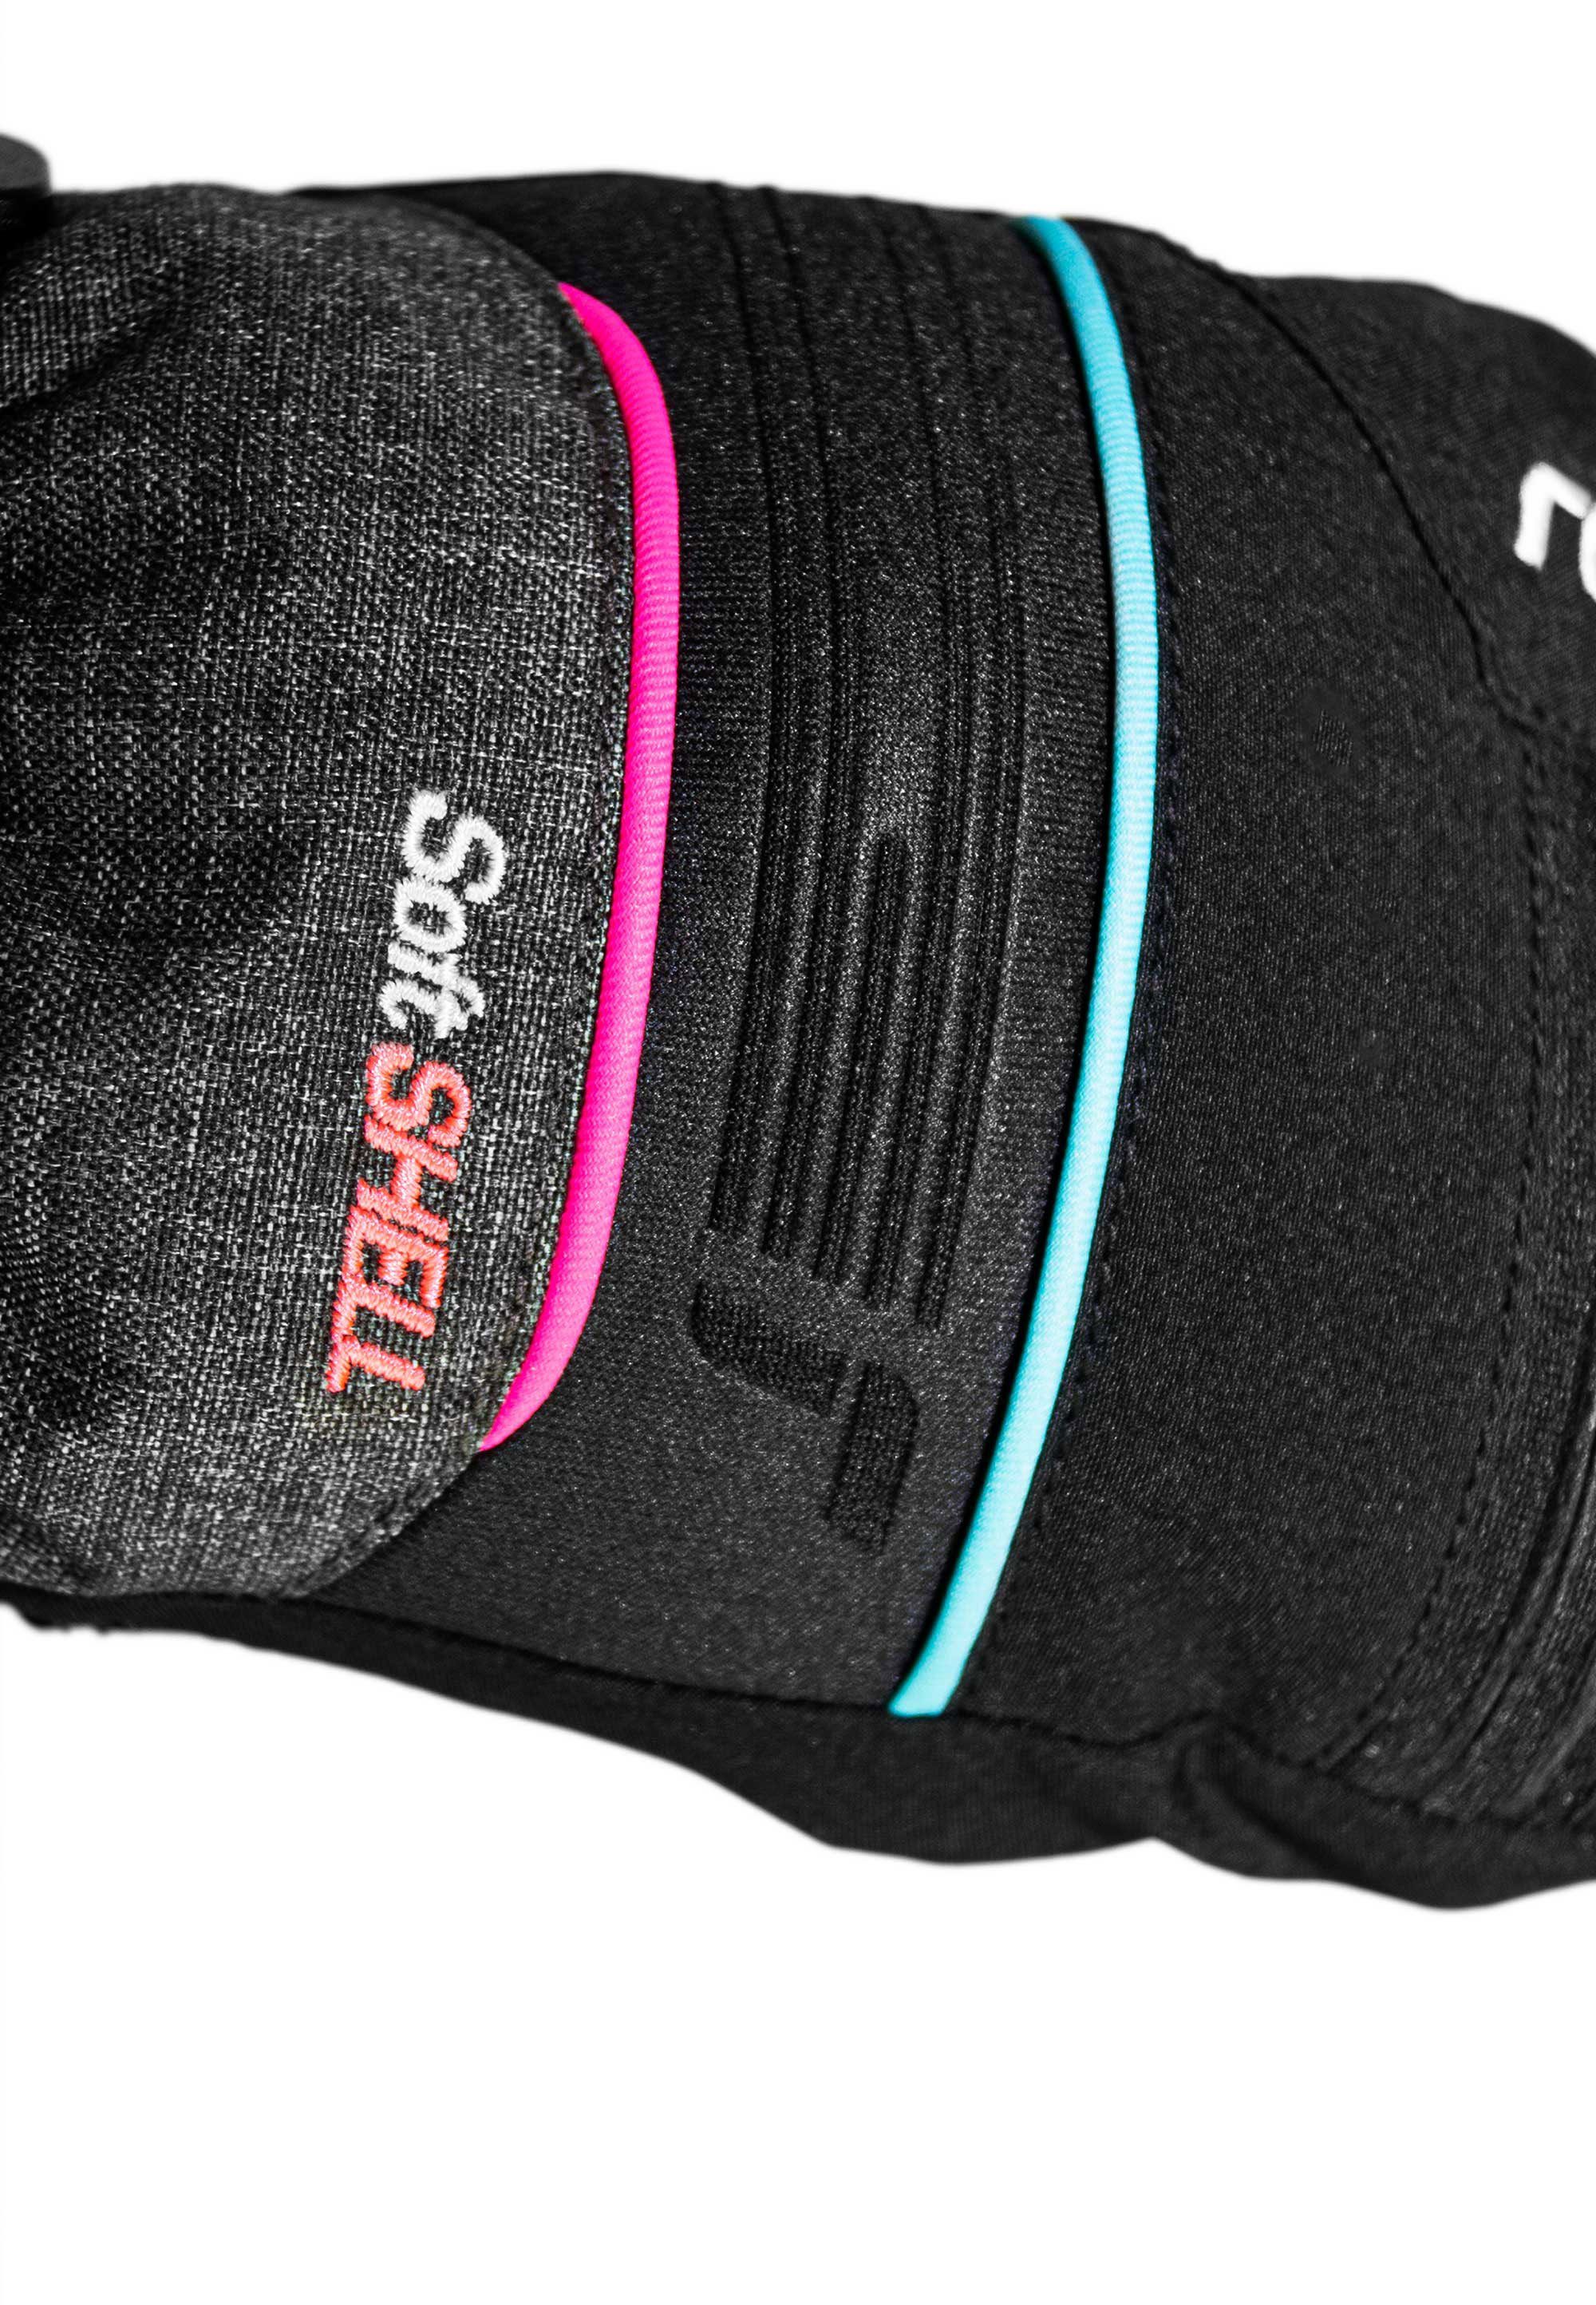 Fäustlinge schwarz-rosa mit Junior XT innovativer Kondor R-TEX® Insert-Membran Reusch Mitten